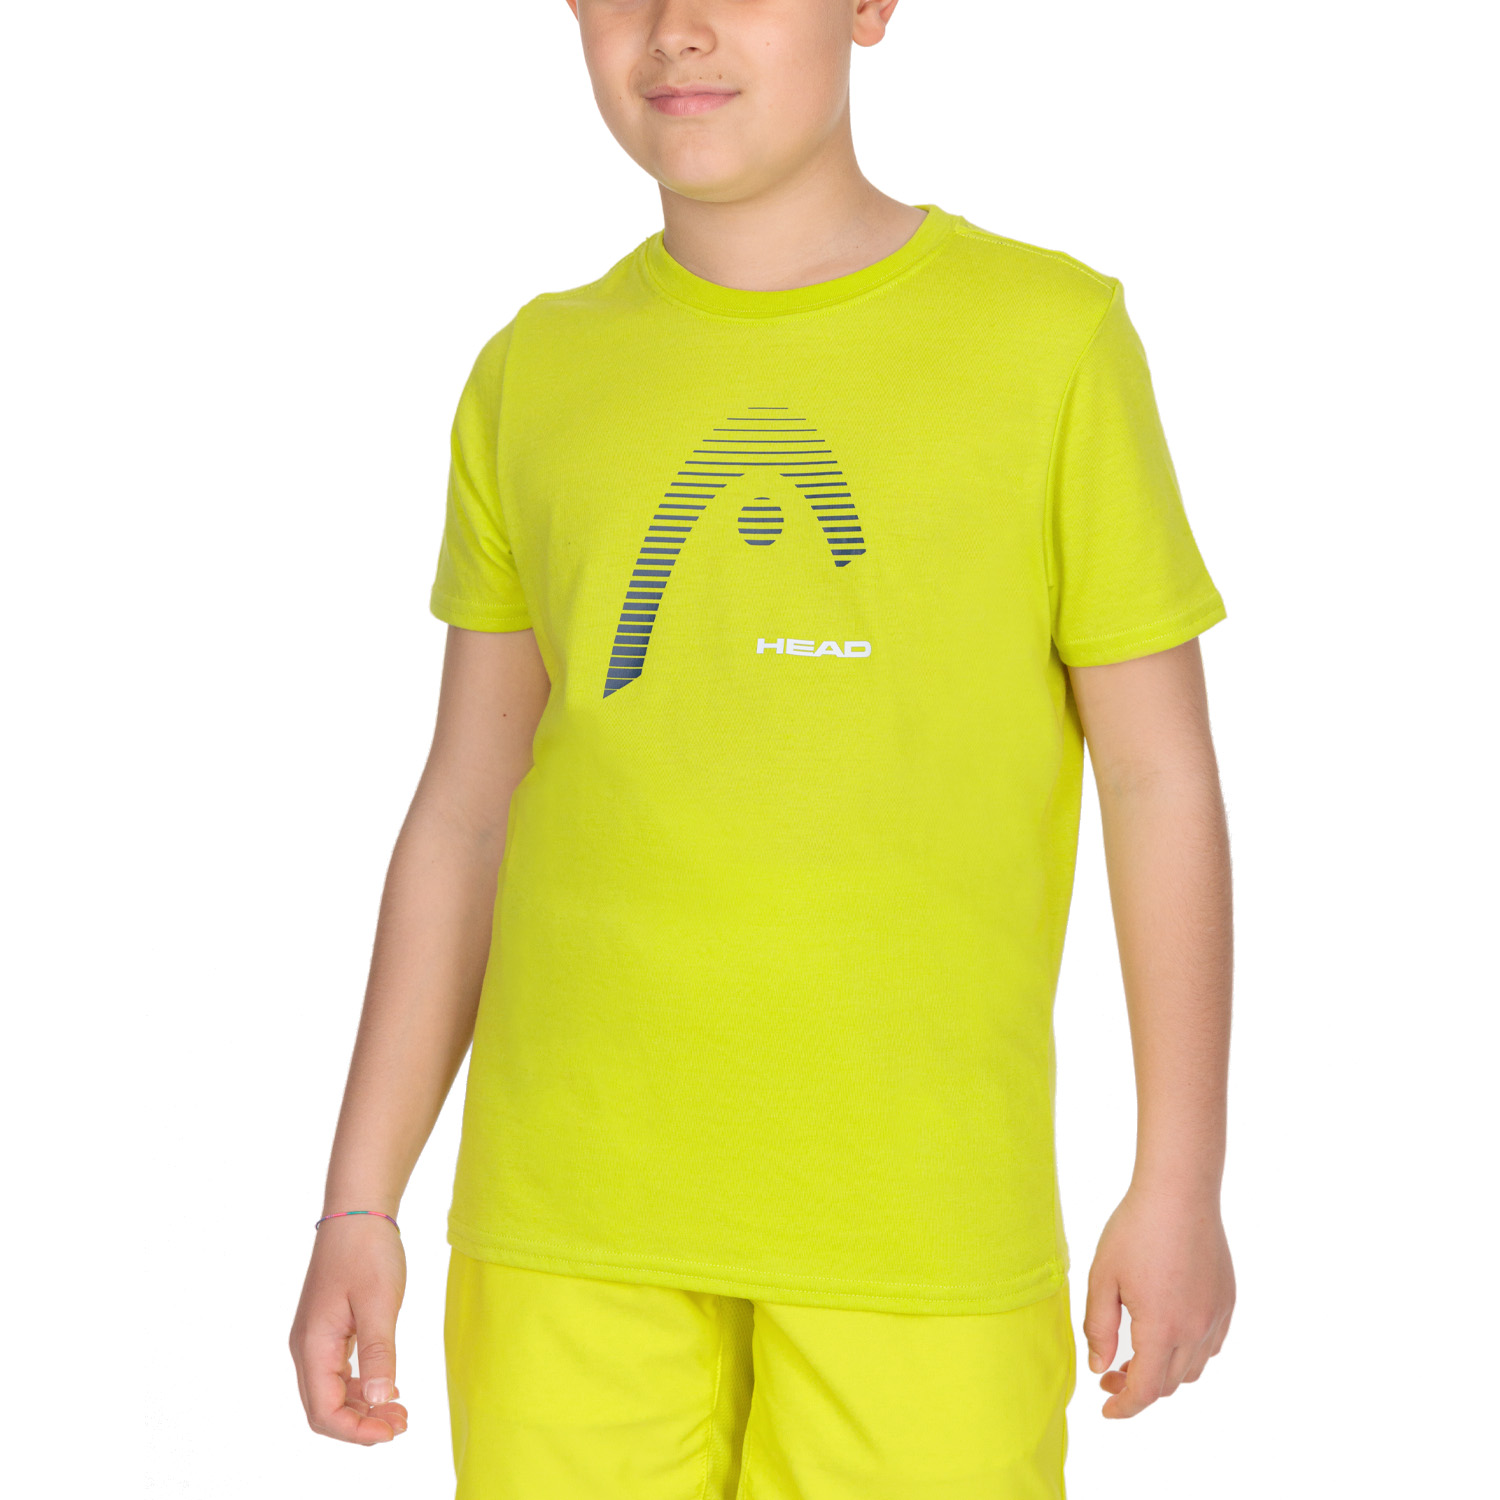 Head Club Carl T-Shirt Junior - Yellow